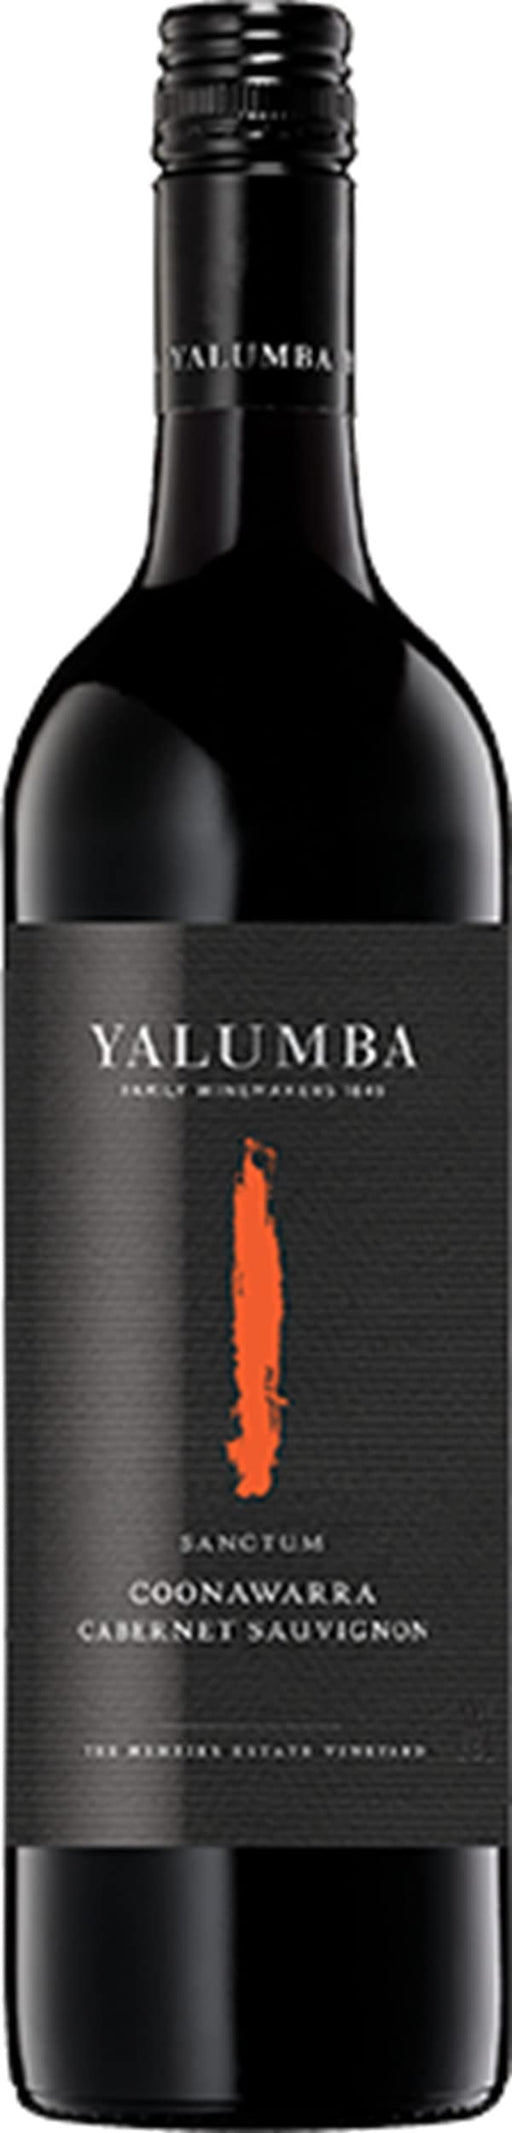 Yalumba Sanctum Cabernet Sauvignon 2019 750 ml, Pack of 6  Yalumba